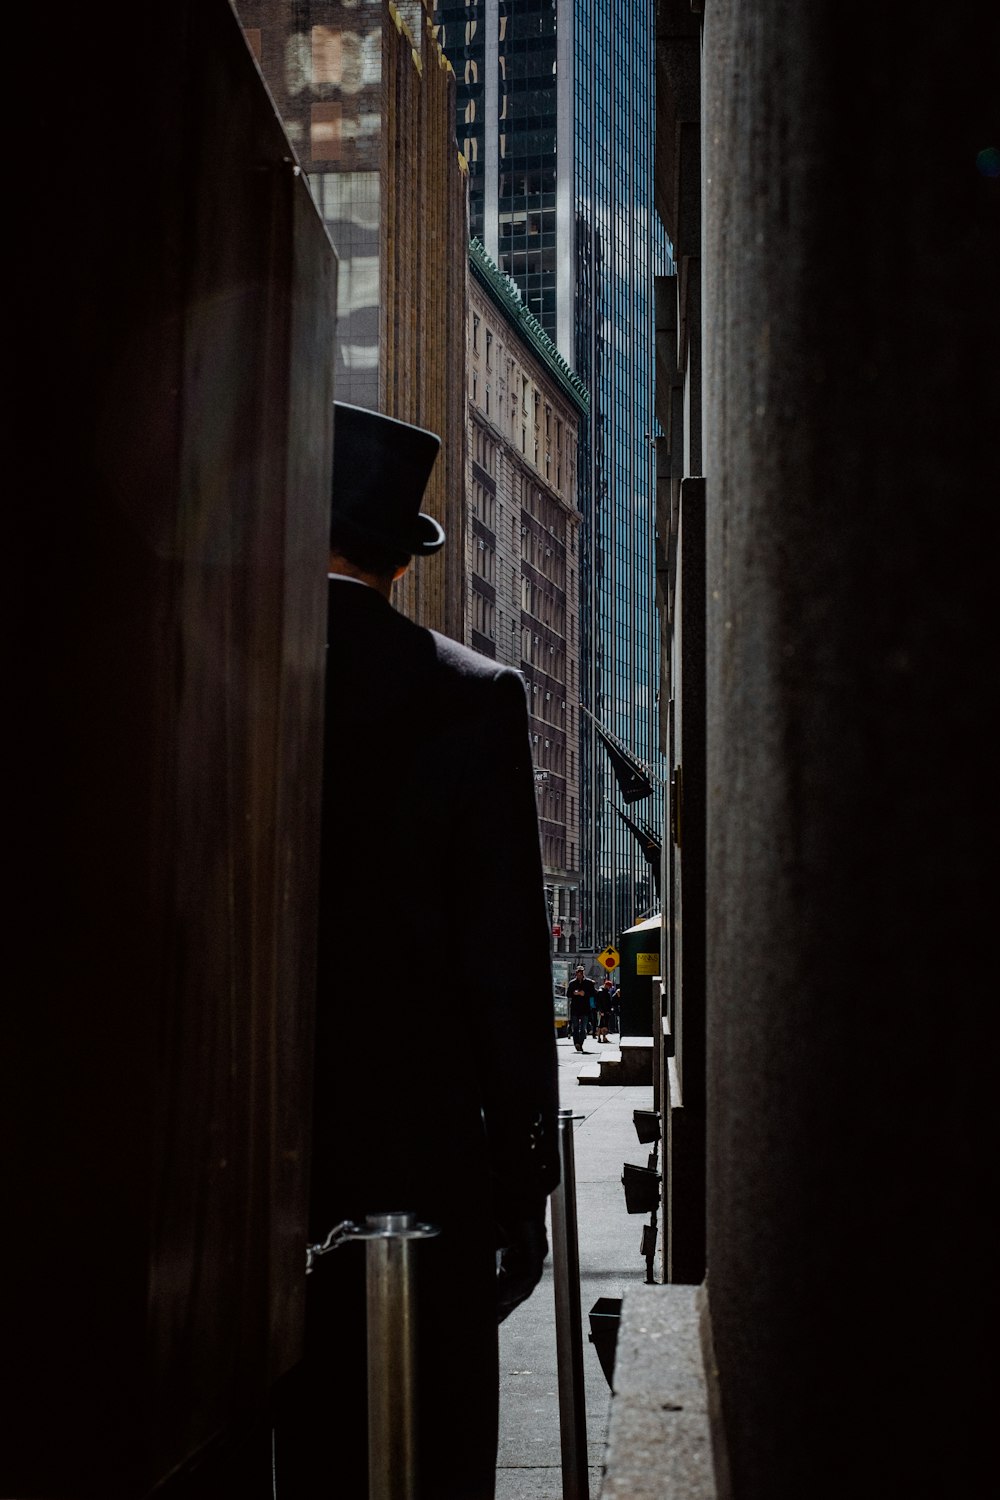 man wearing top hat standing near buildings